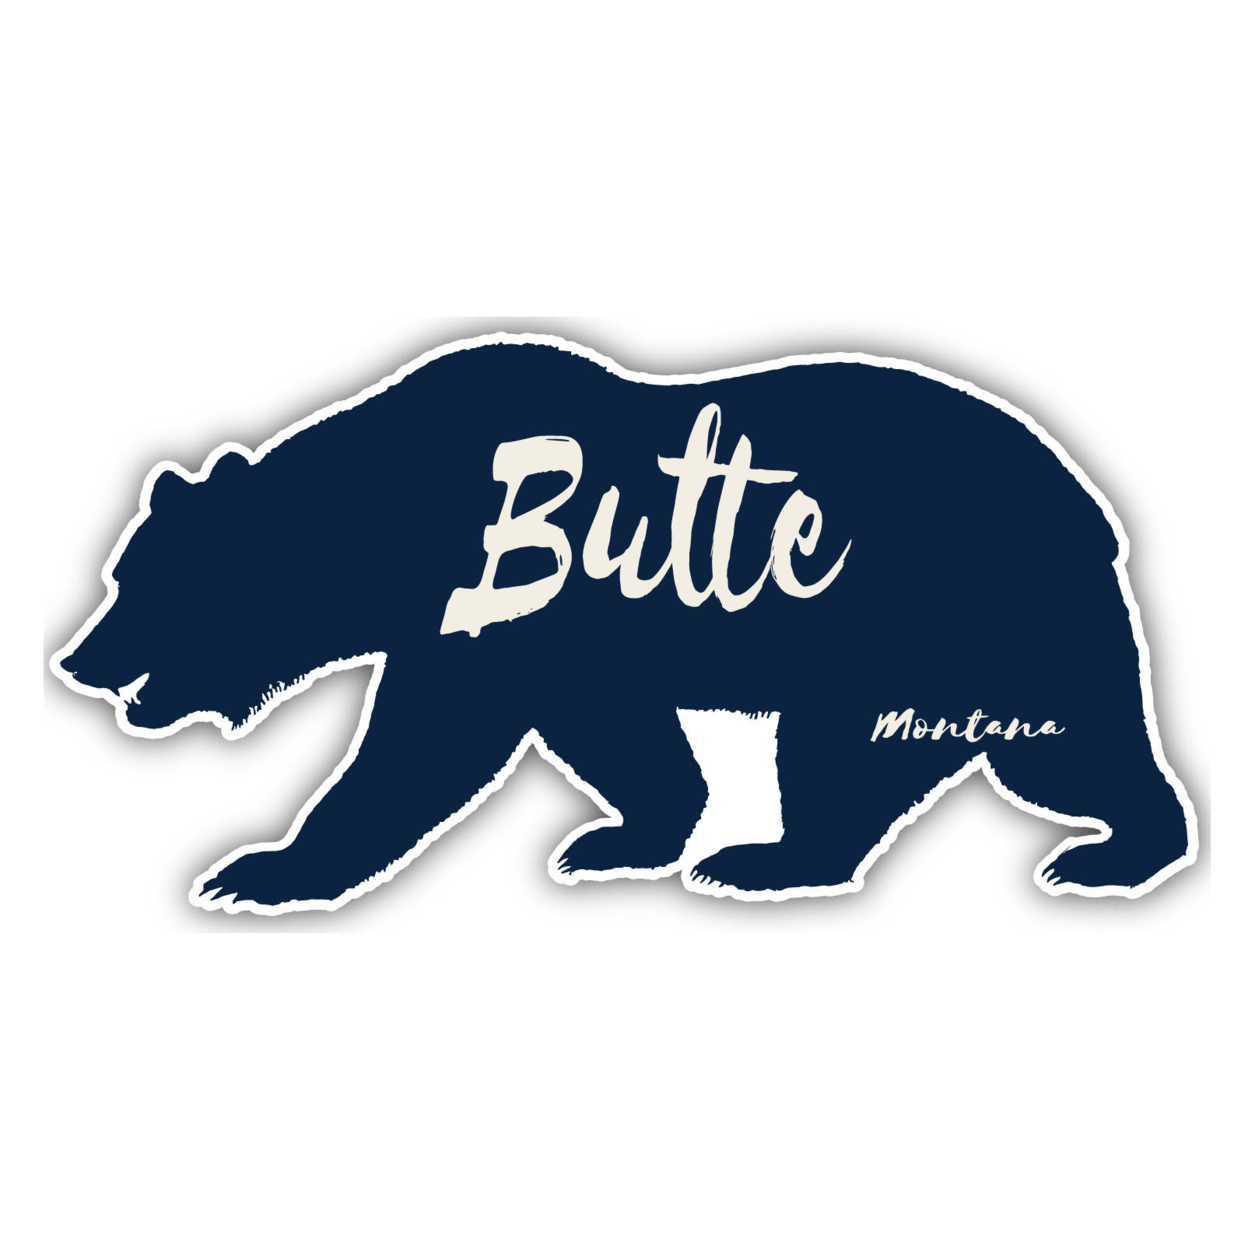 Butte Montana Souvenir Decorative Stickers (Choose Theme And Size) - Single Unit, 2-Inch, Camp Life